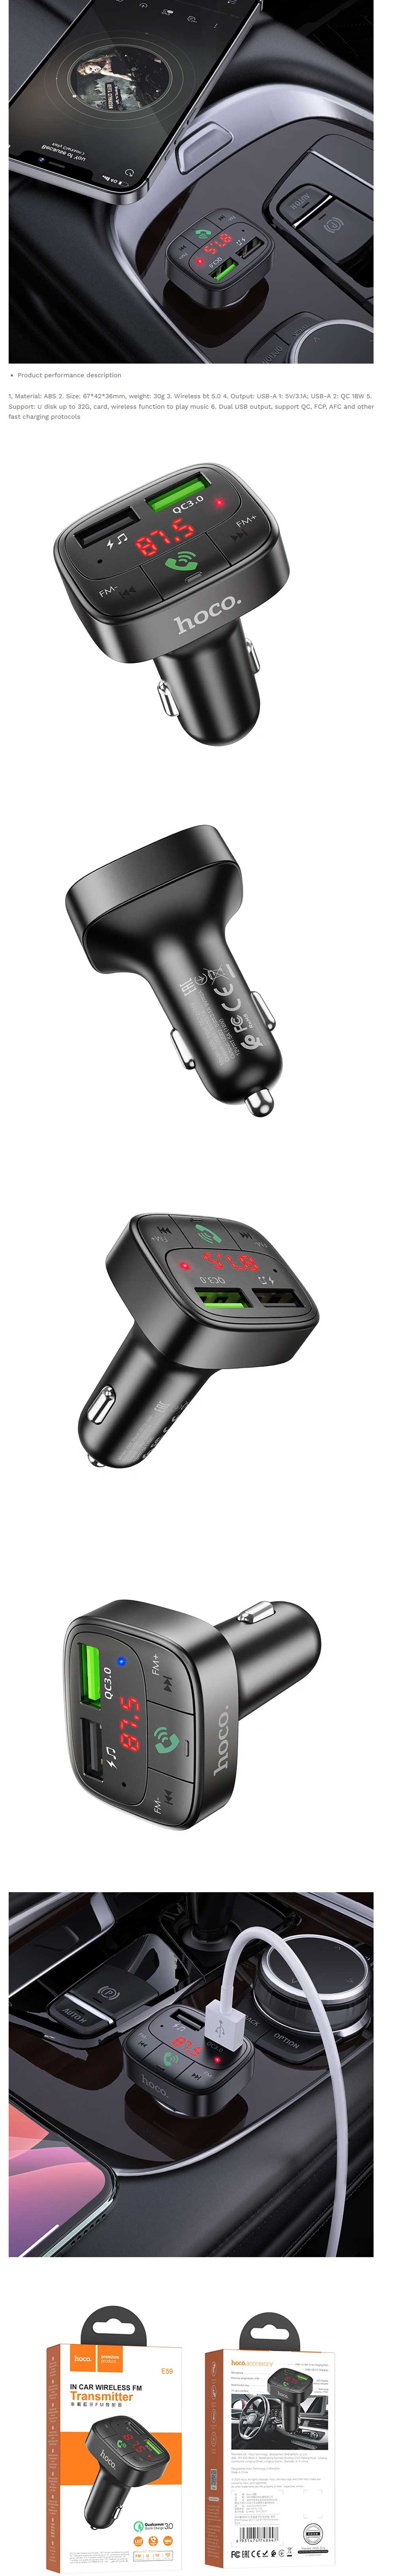 HOCO E59 Dual USB Car Charger Bluetooth FM Transmitter